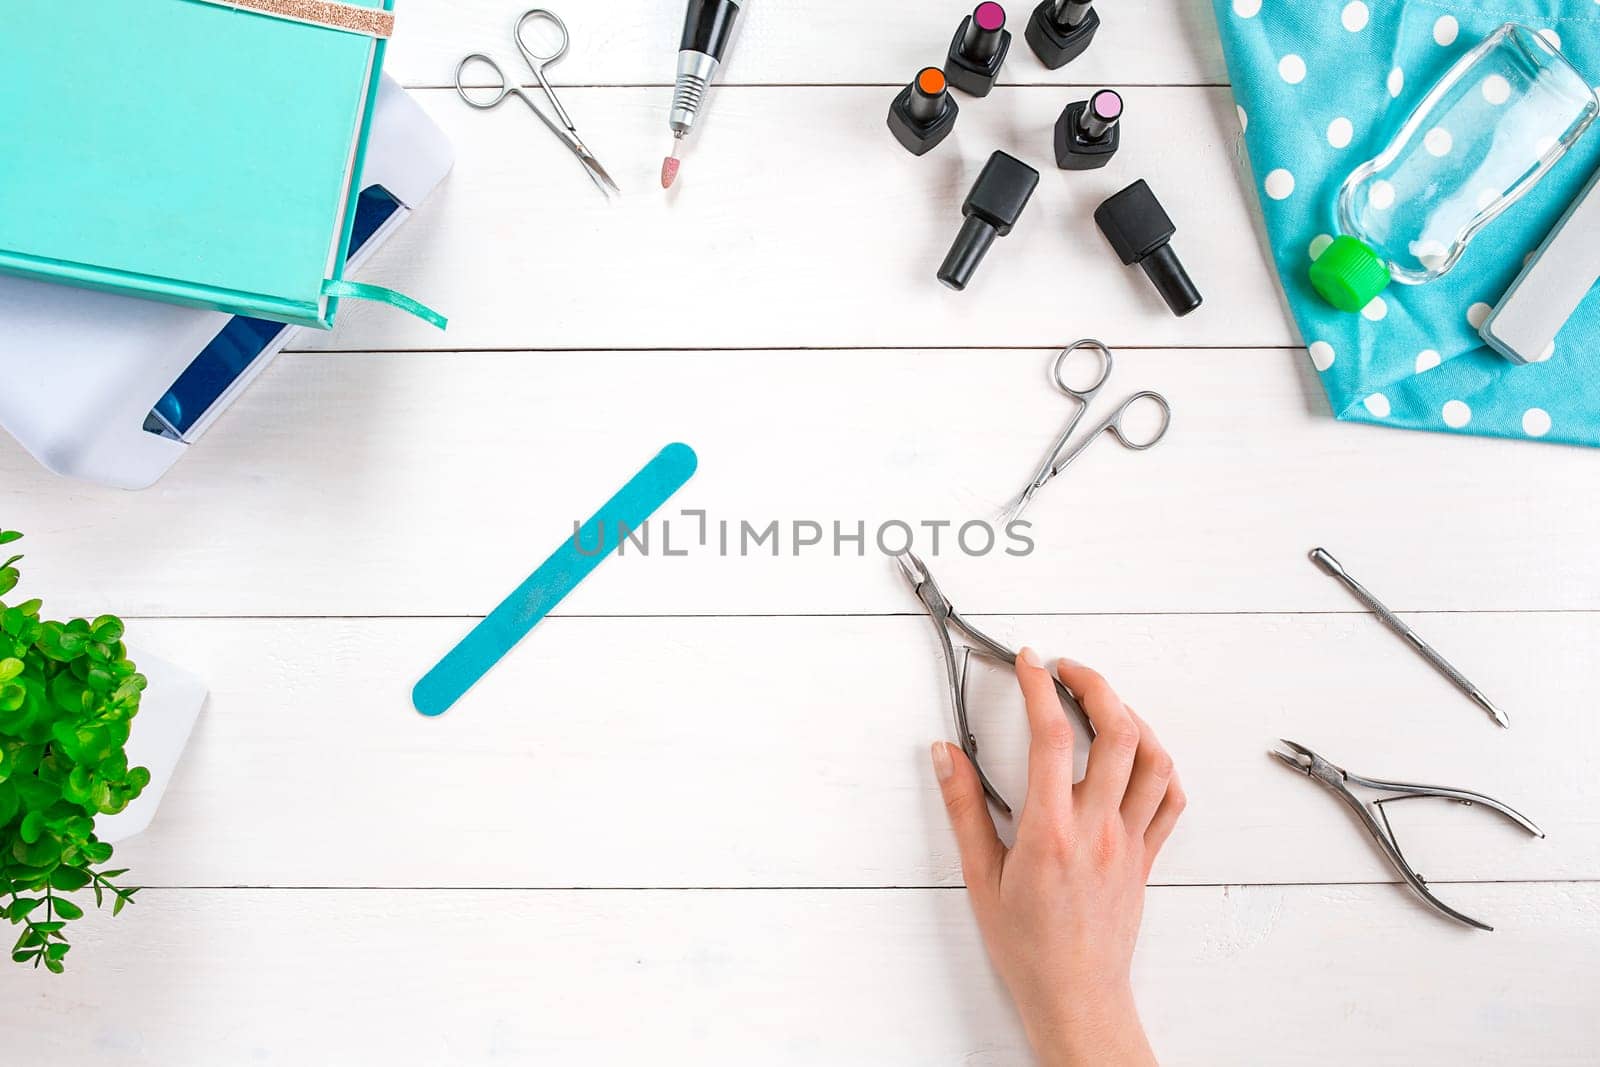 Manicure set and nail polish on wooden background by nazarovsergey